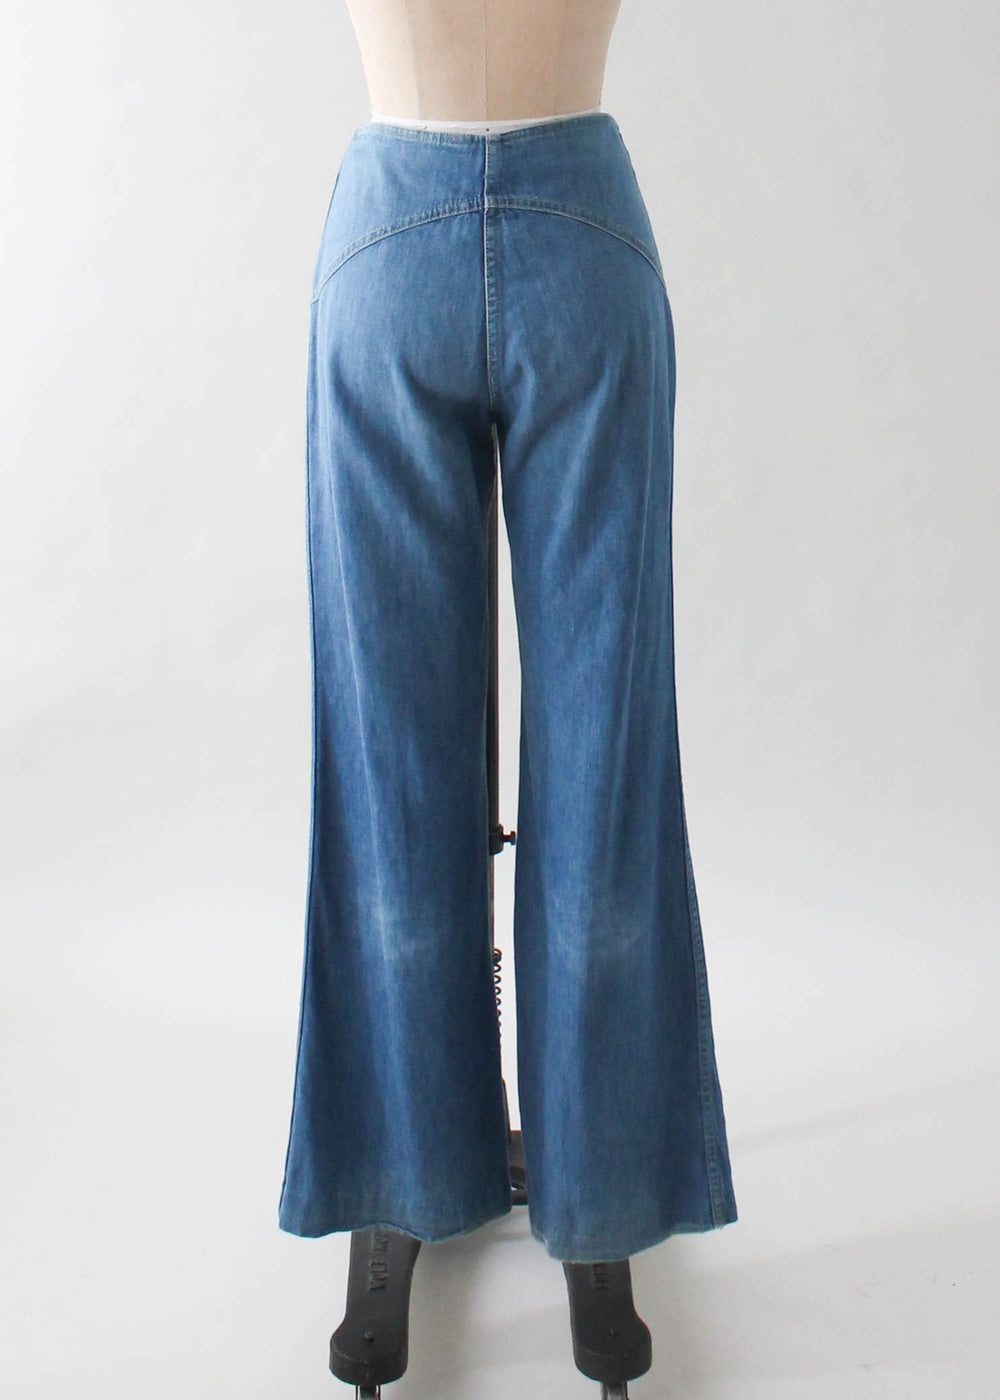 Vintage 1970s Snap Front Wide Leg Jeans - Raleigh Vintage